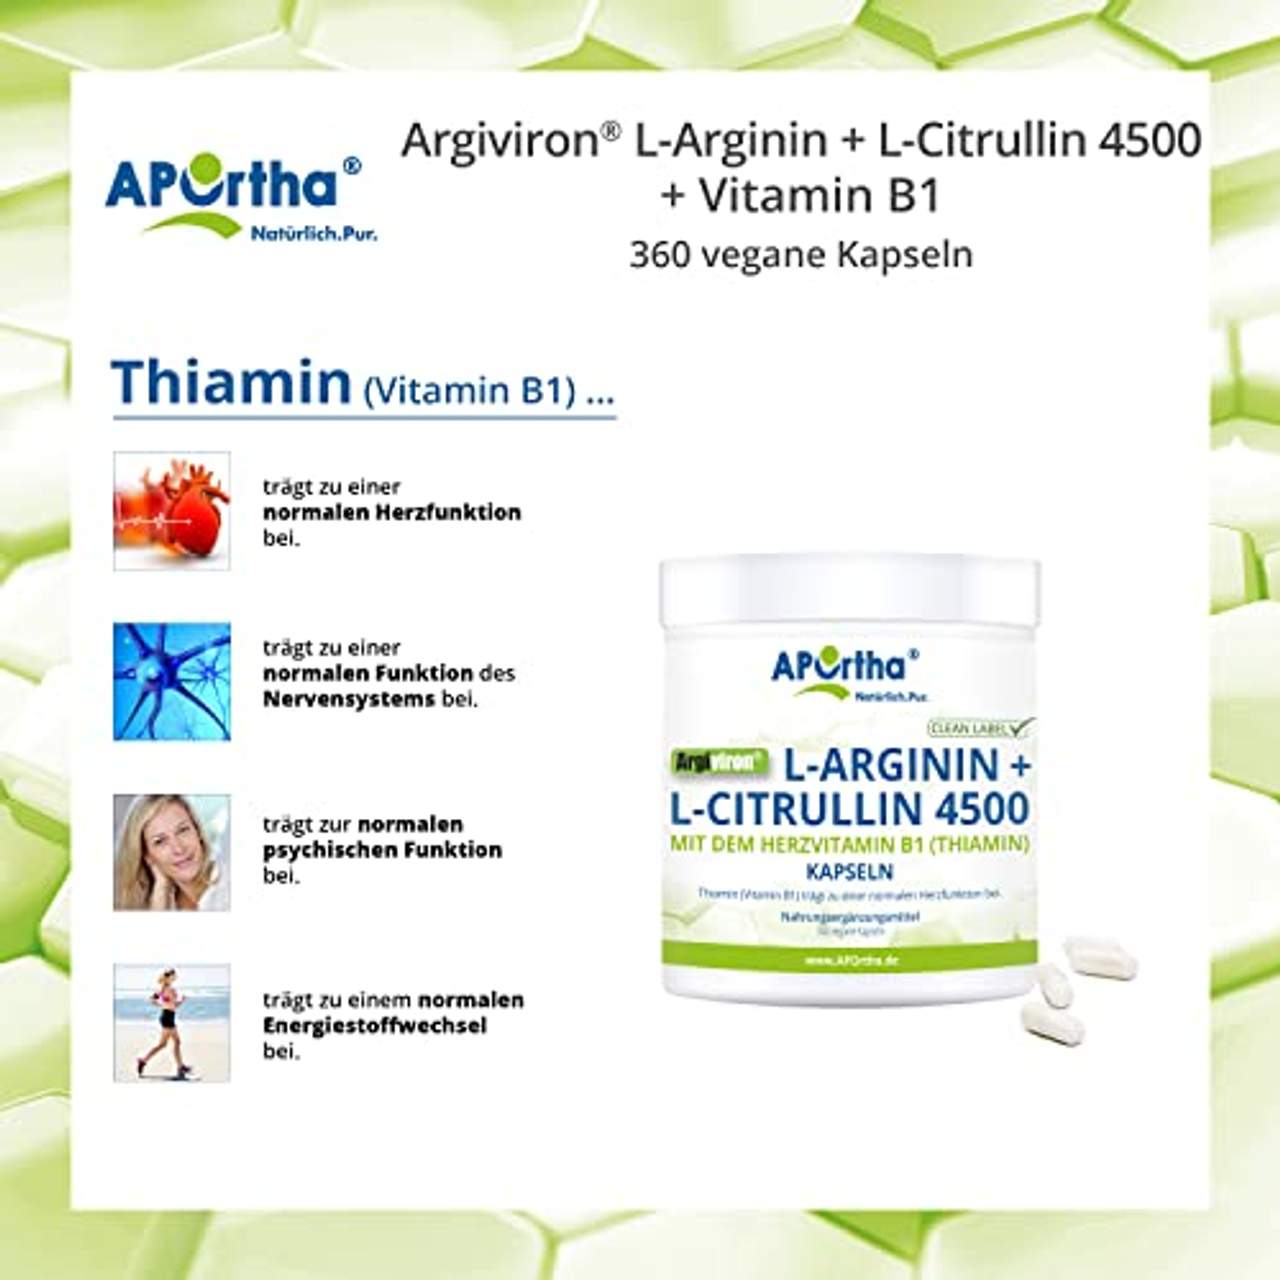 APOrtha Argiviron L-Arginin L-Citrullin 4500 hochdosiert